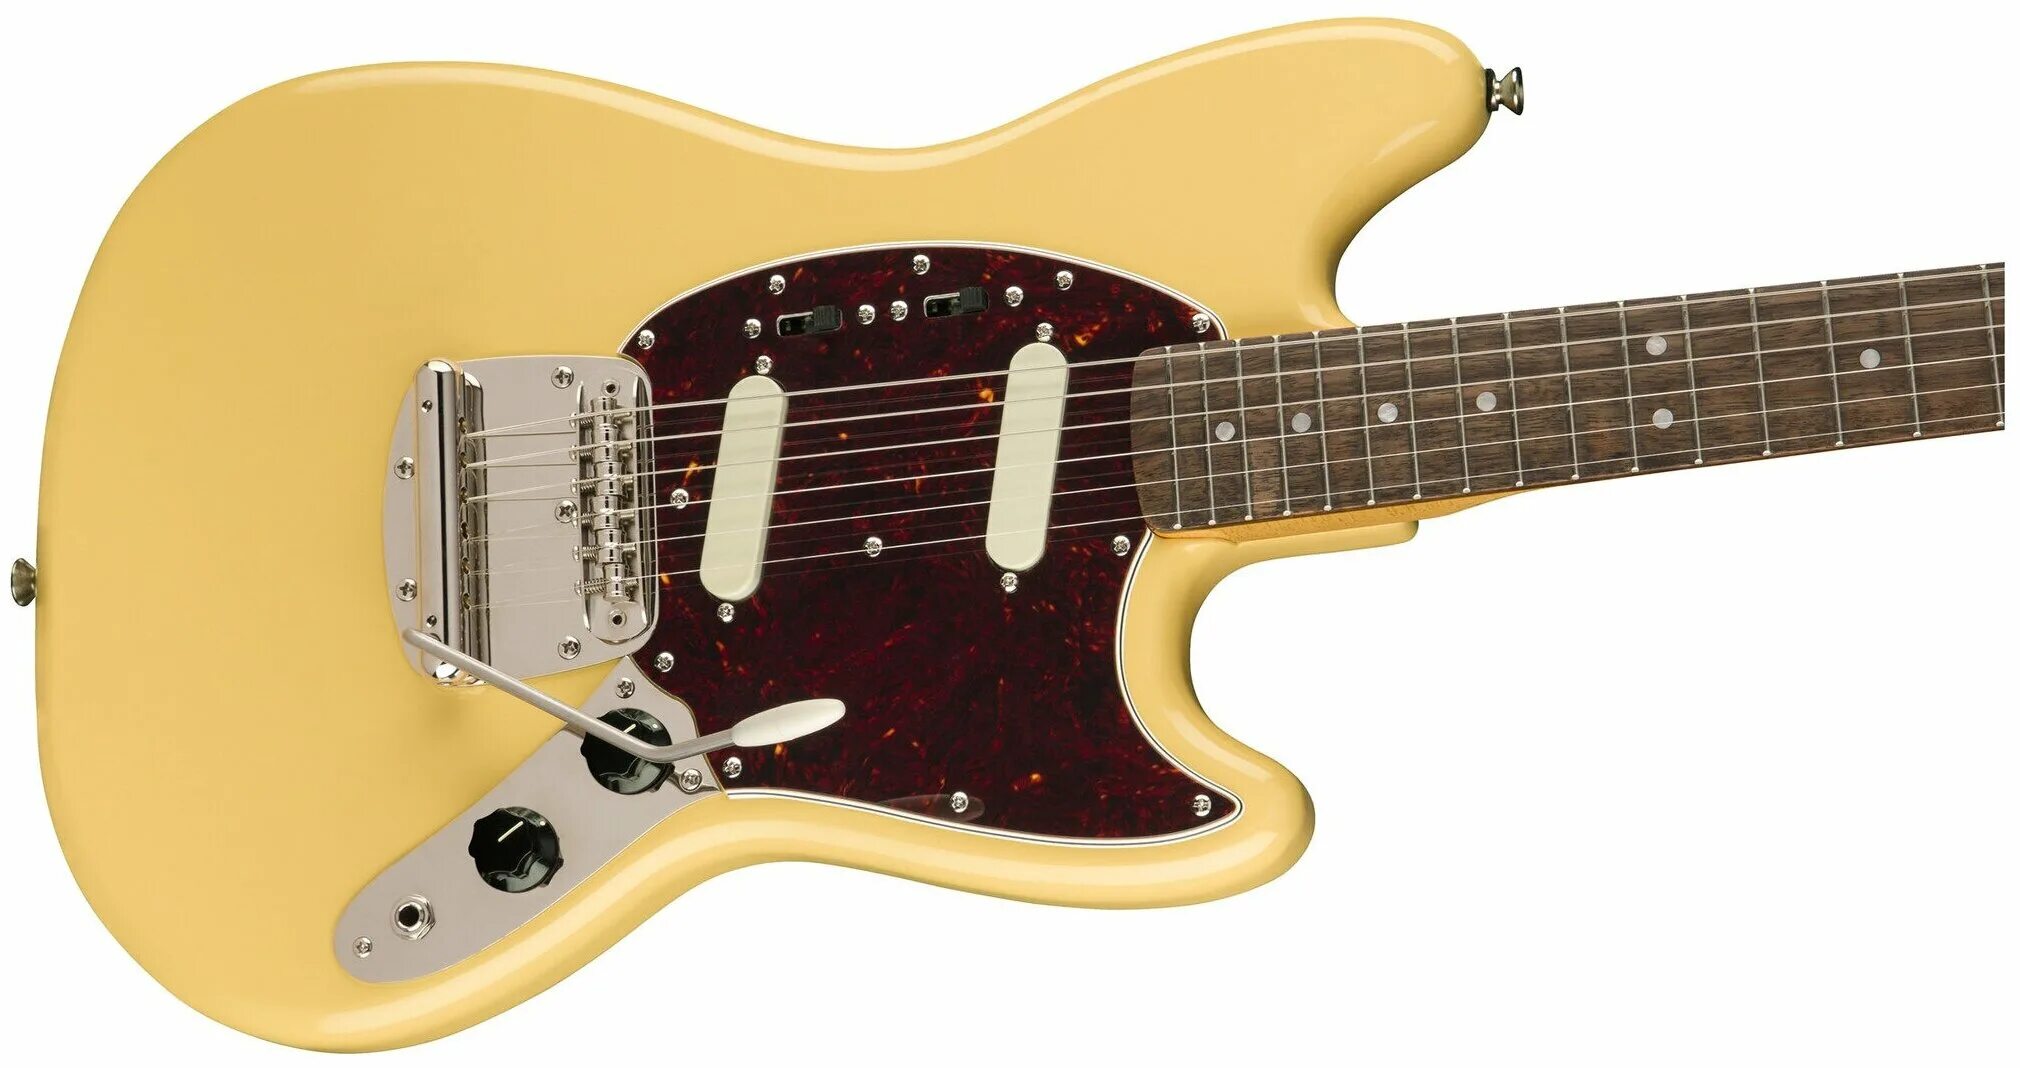 Гитара мустанг. Электрогитара Fender Mustang. Squier Mustang Classic Vibe 60s. Электрогитара Мустанг Фендер скваер. Classic Vibe '60s Mustang.